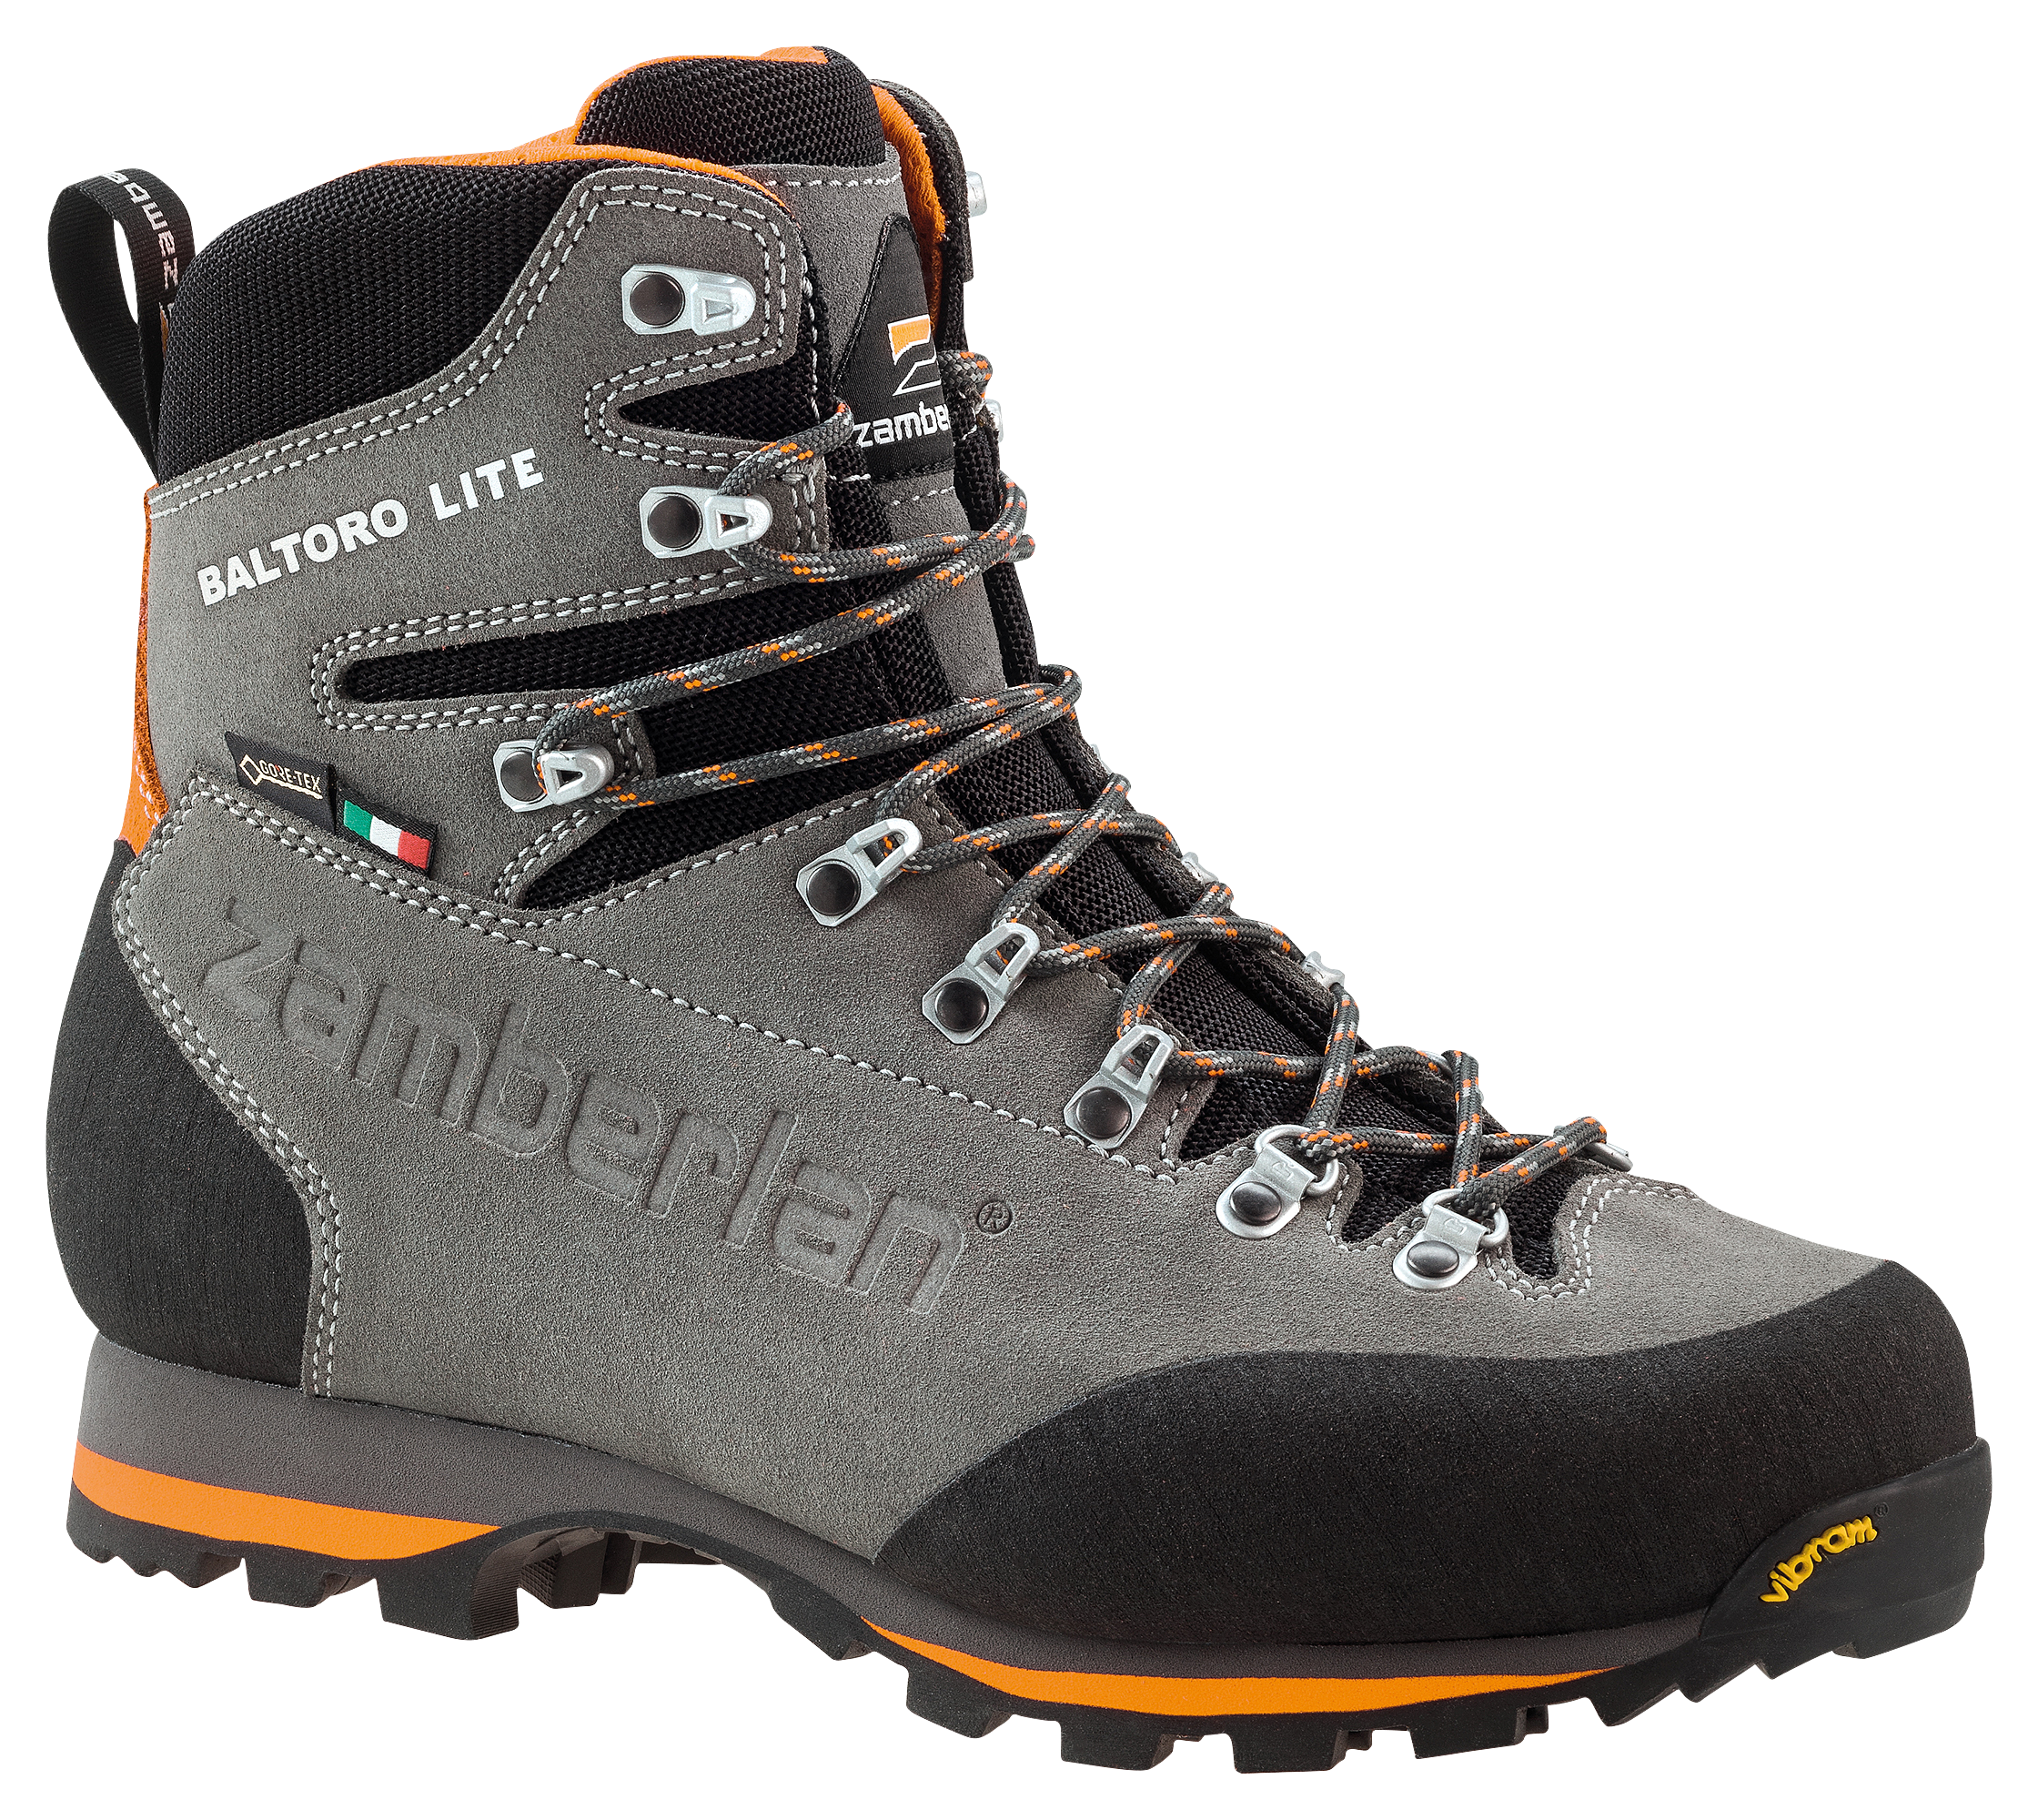 Zamberlan 1110 Baltoro Lite GTX RR Waterproof Hiking Boots for Men - Graphite/Black - 13M